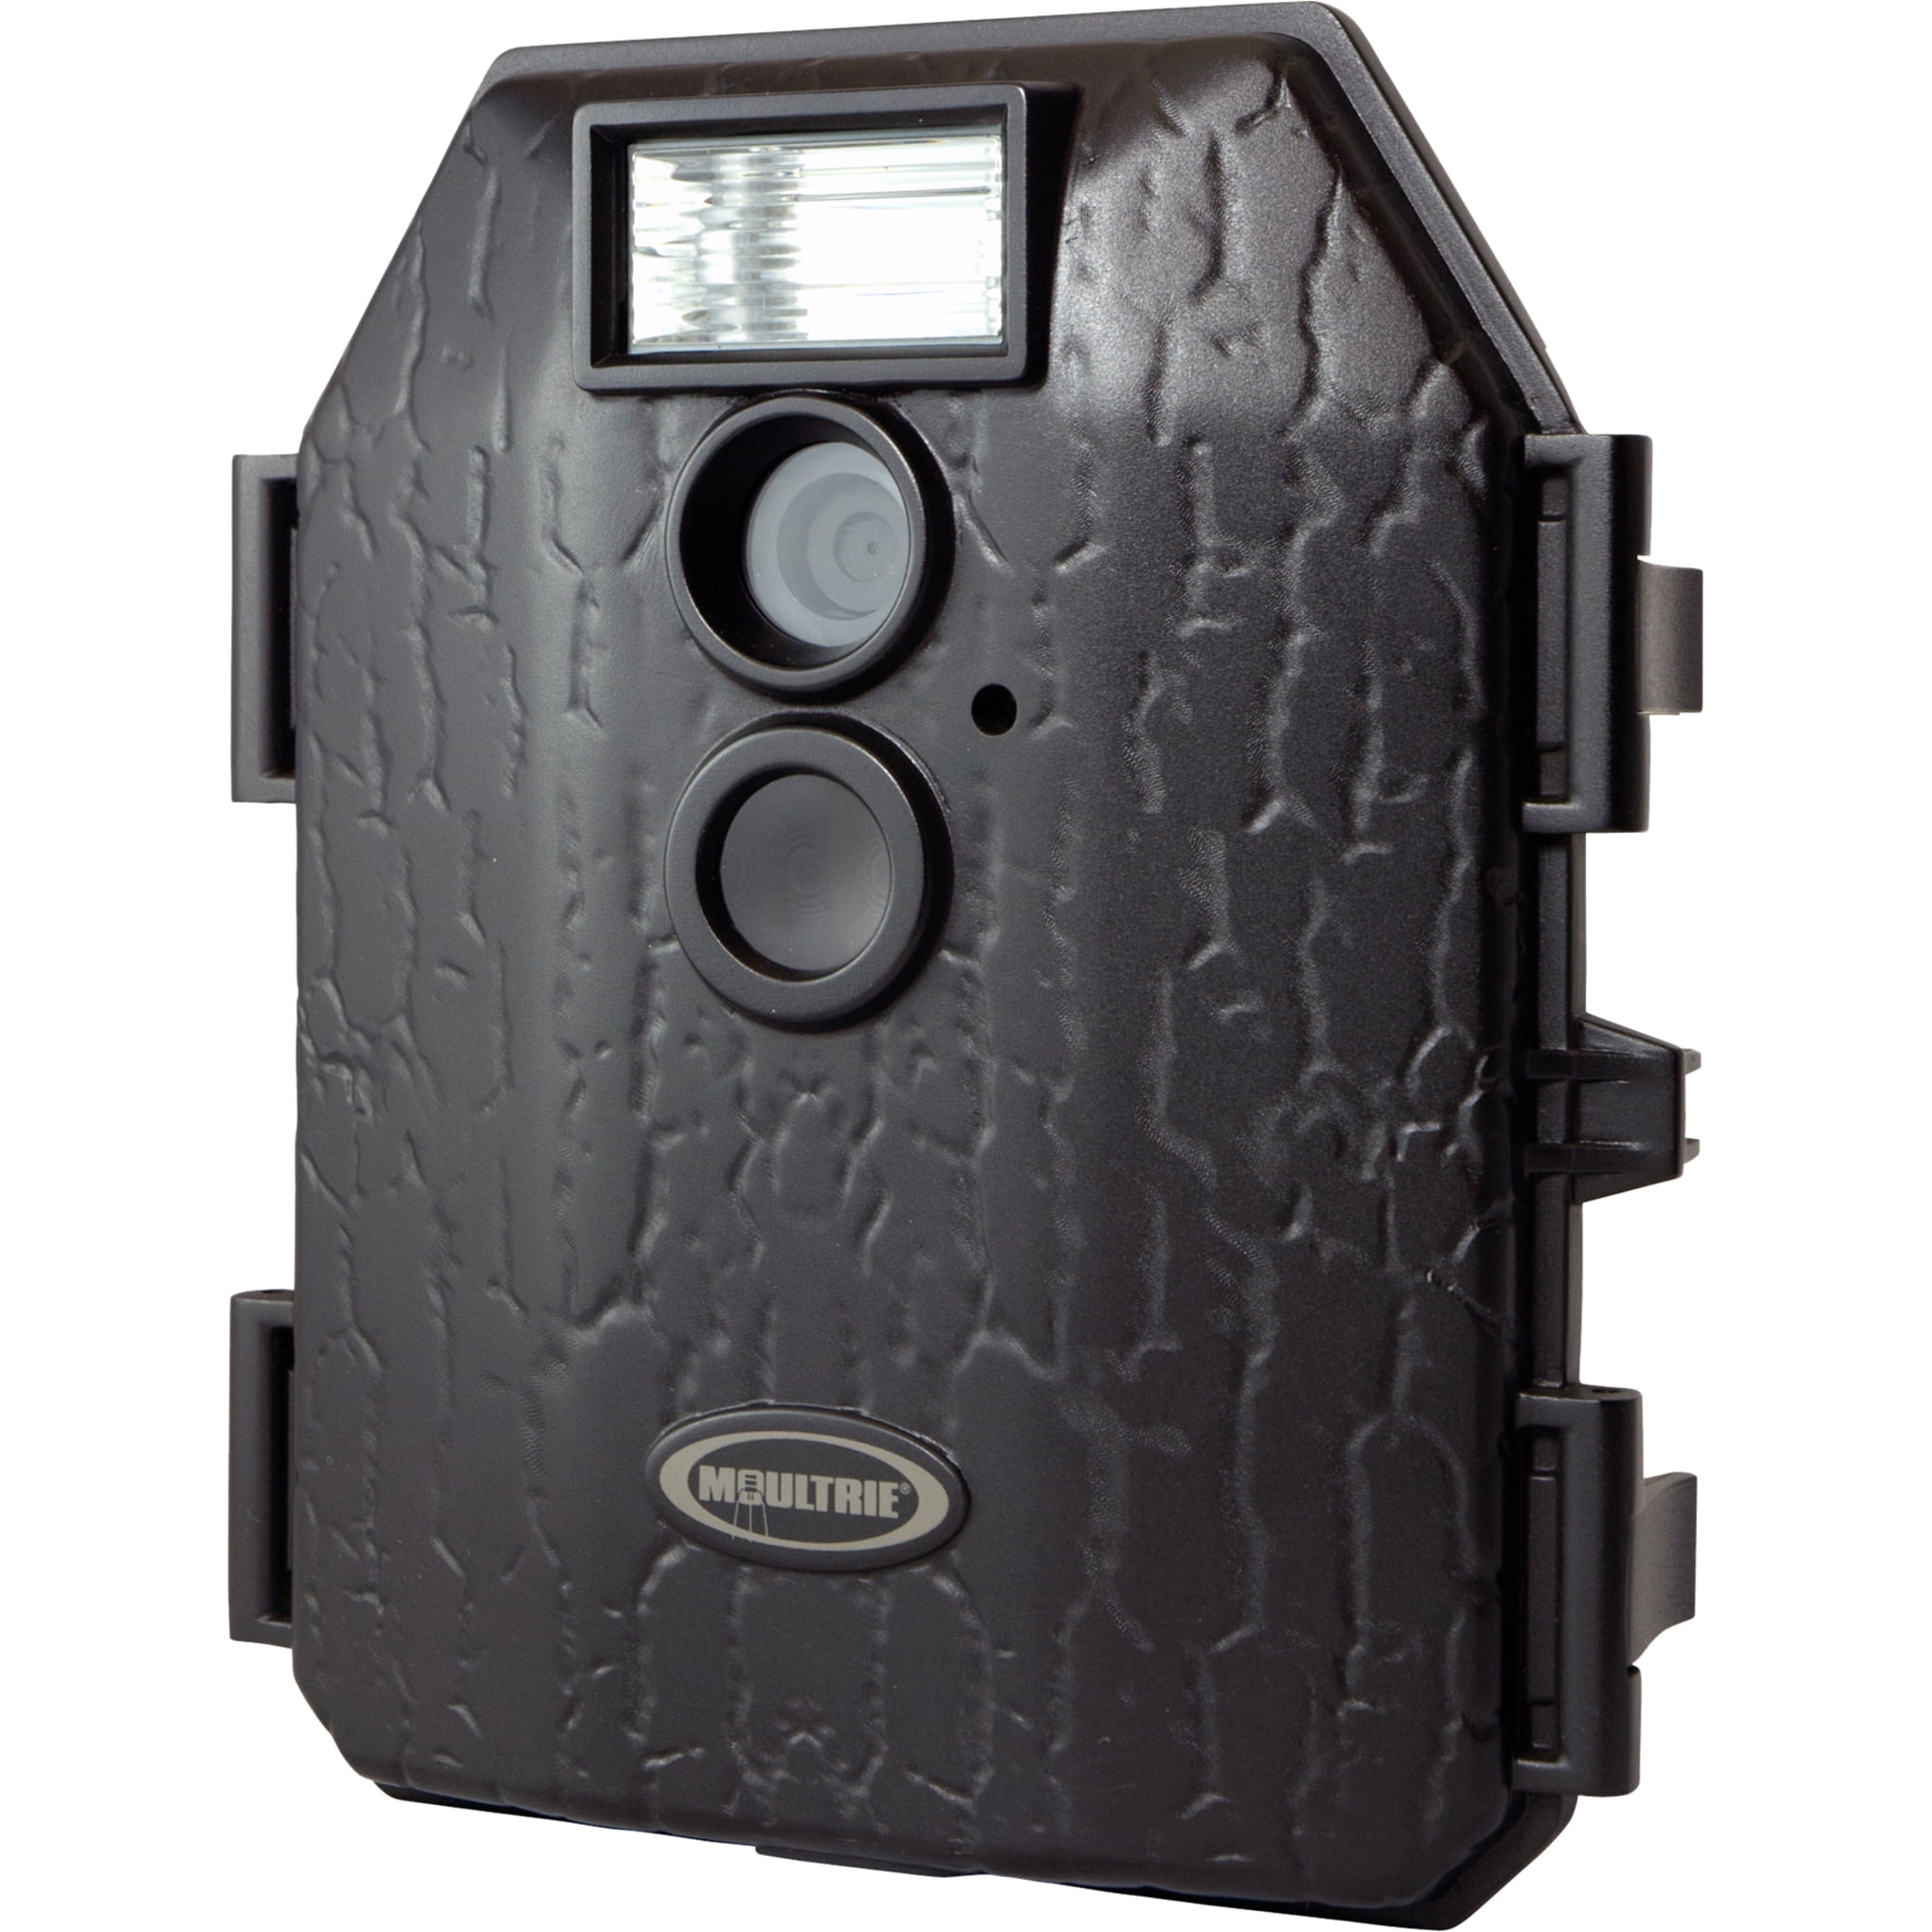 MoultrieMCG-13200Trail Camera Game Spy 2 Plus 